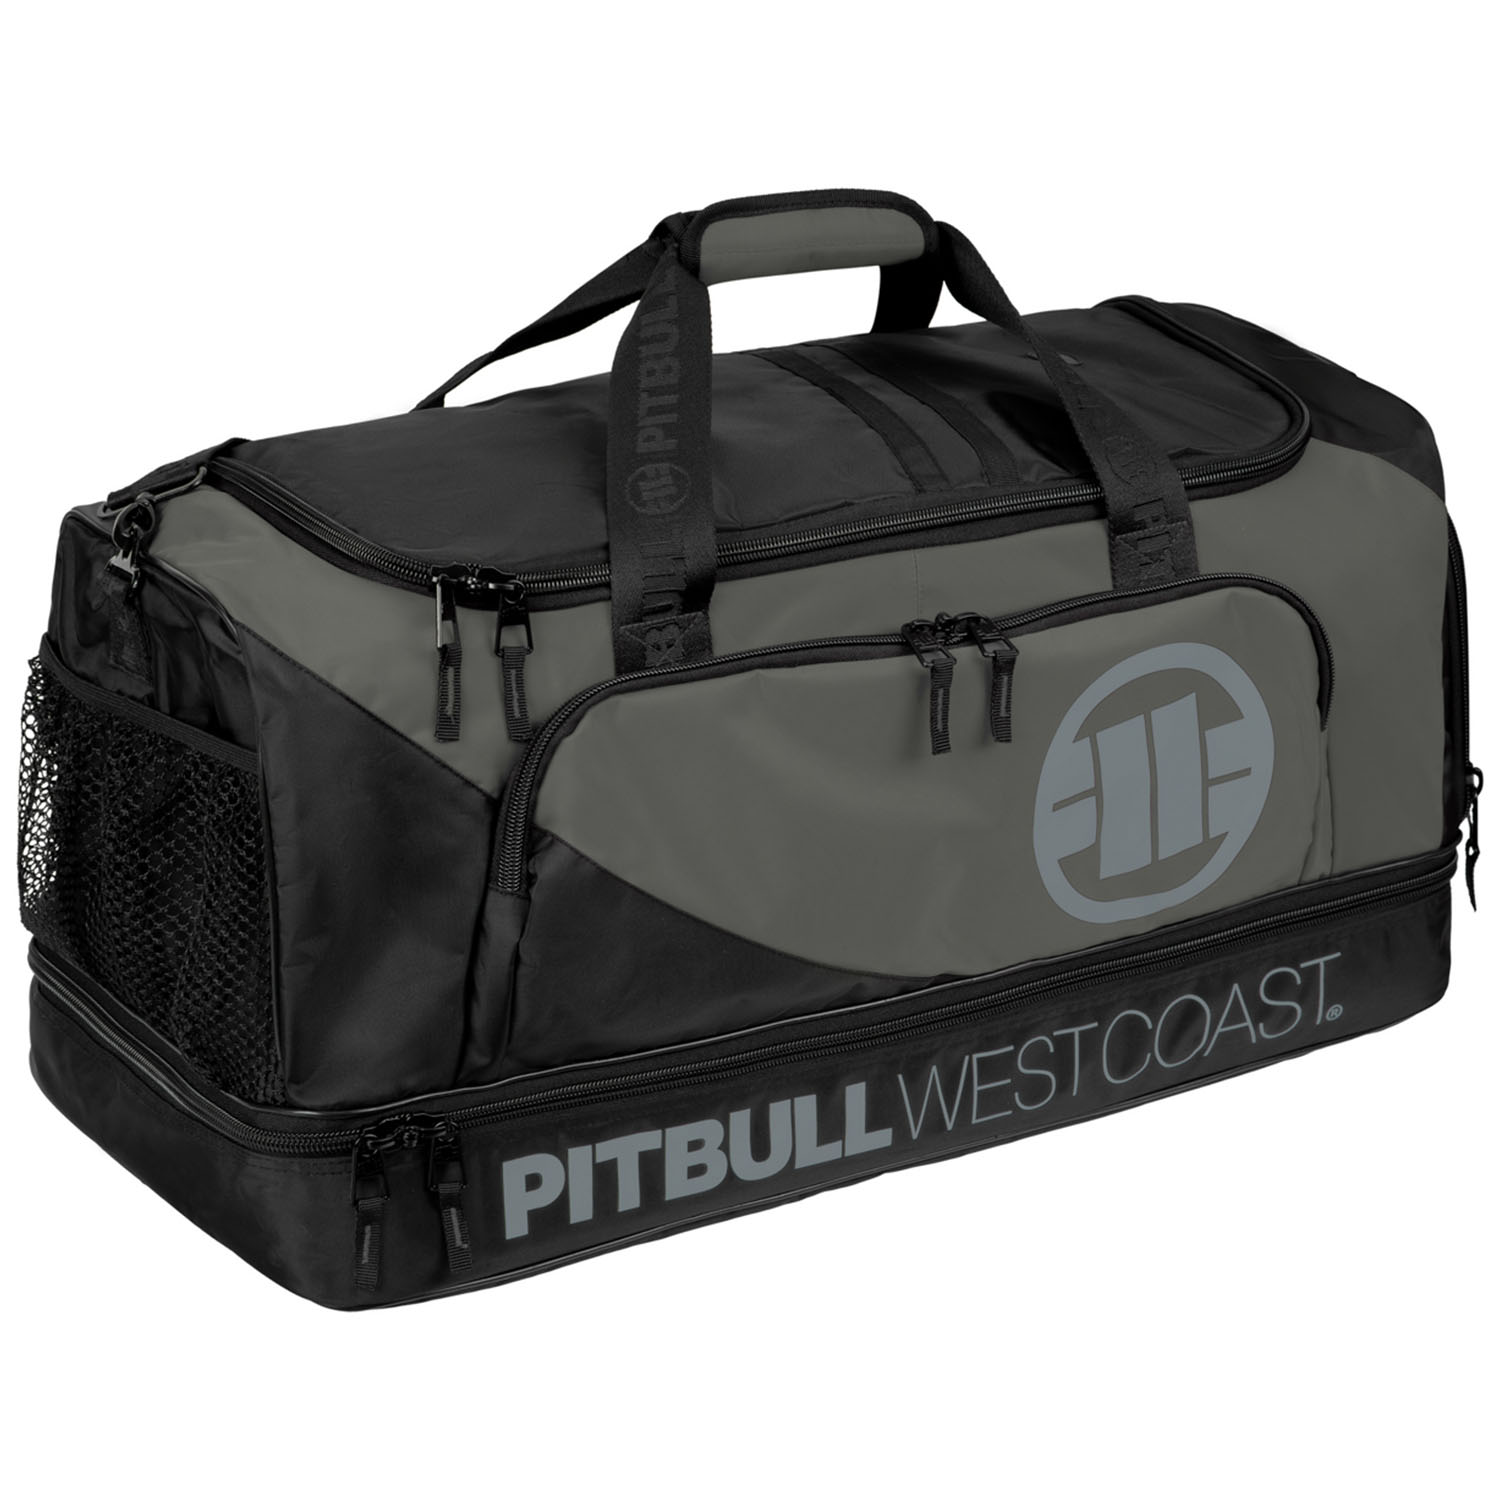 Pit Bull West Coast, Sport Bag, Big Duffle Bag, Logo TNT, black-grey